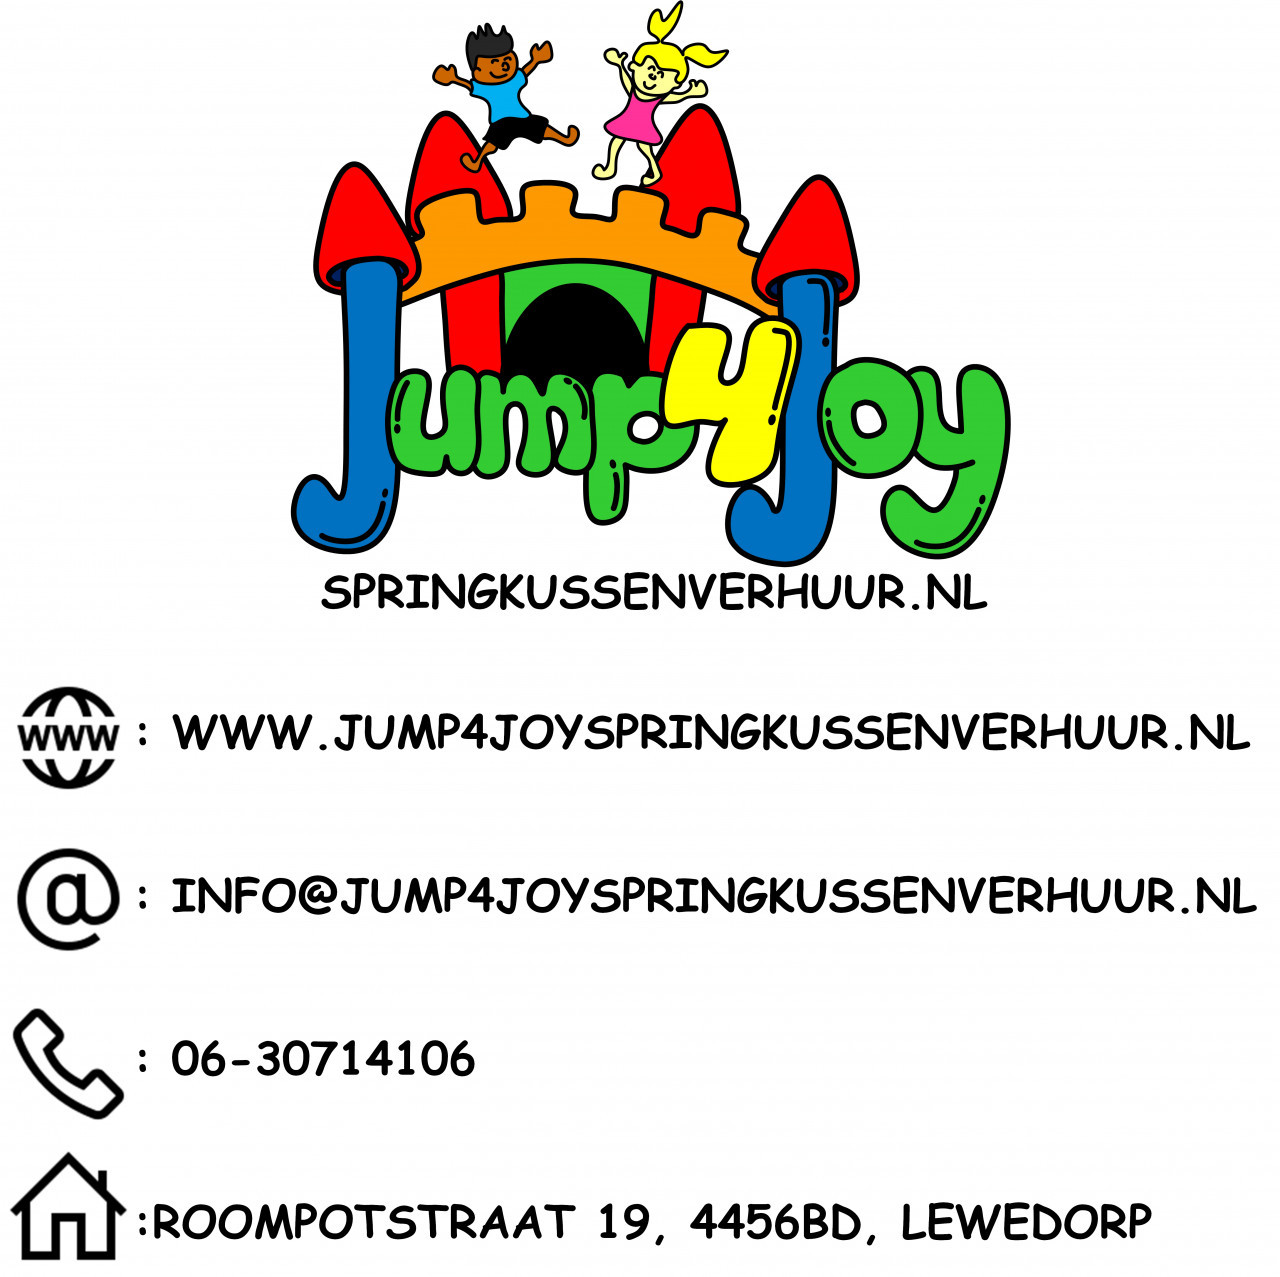 Suikerspin machine: www.jump4joyspringkussenverhuur.nl